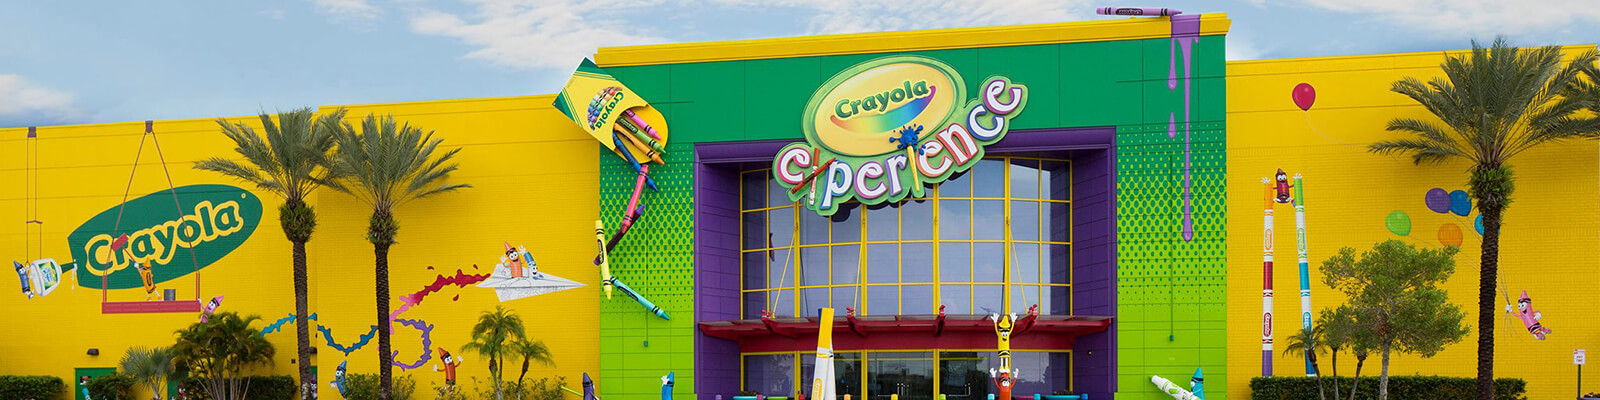 Crayola Experience Orlando Coupons